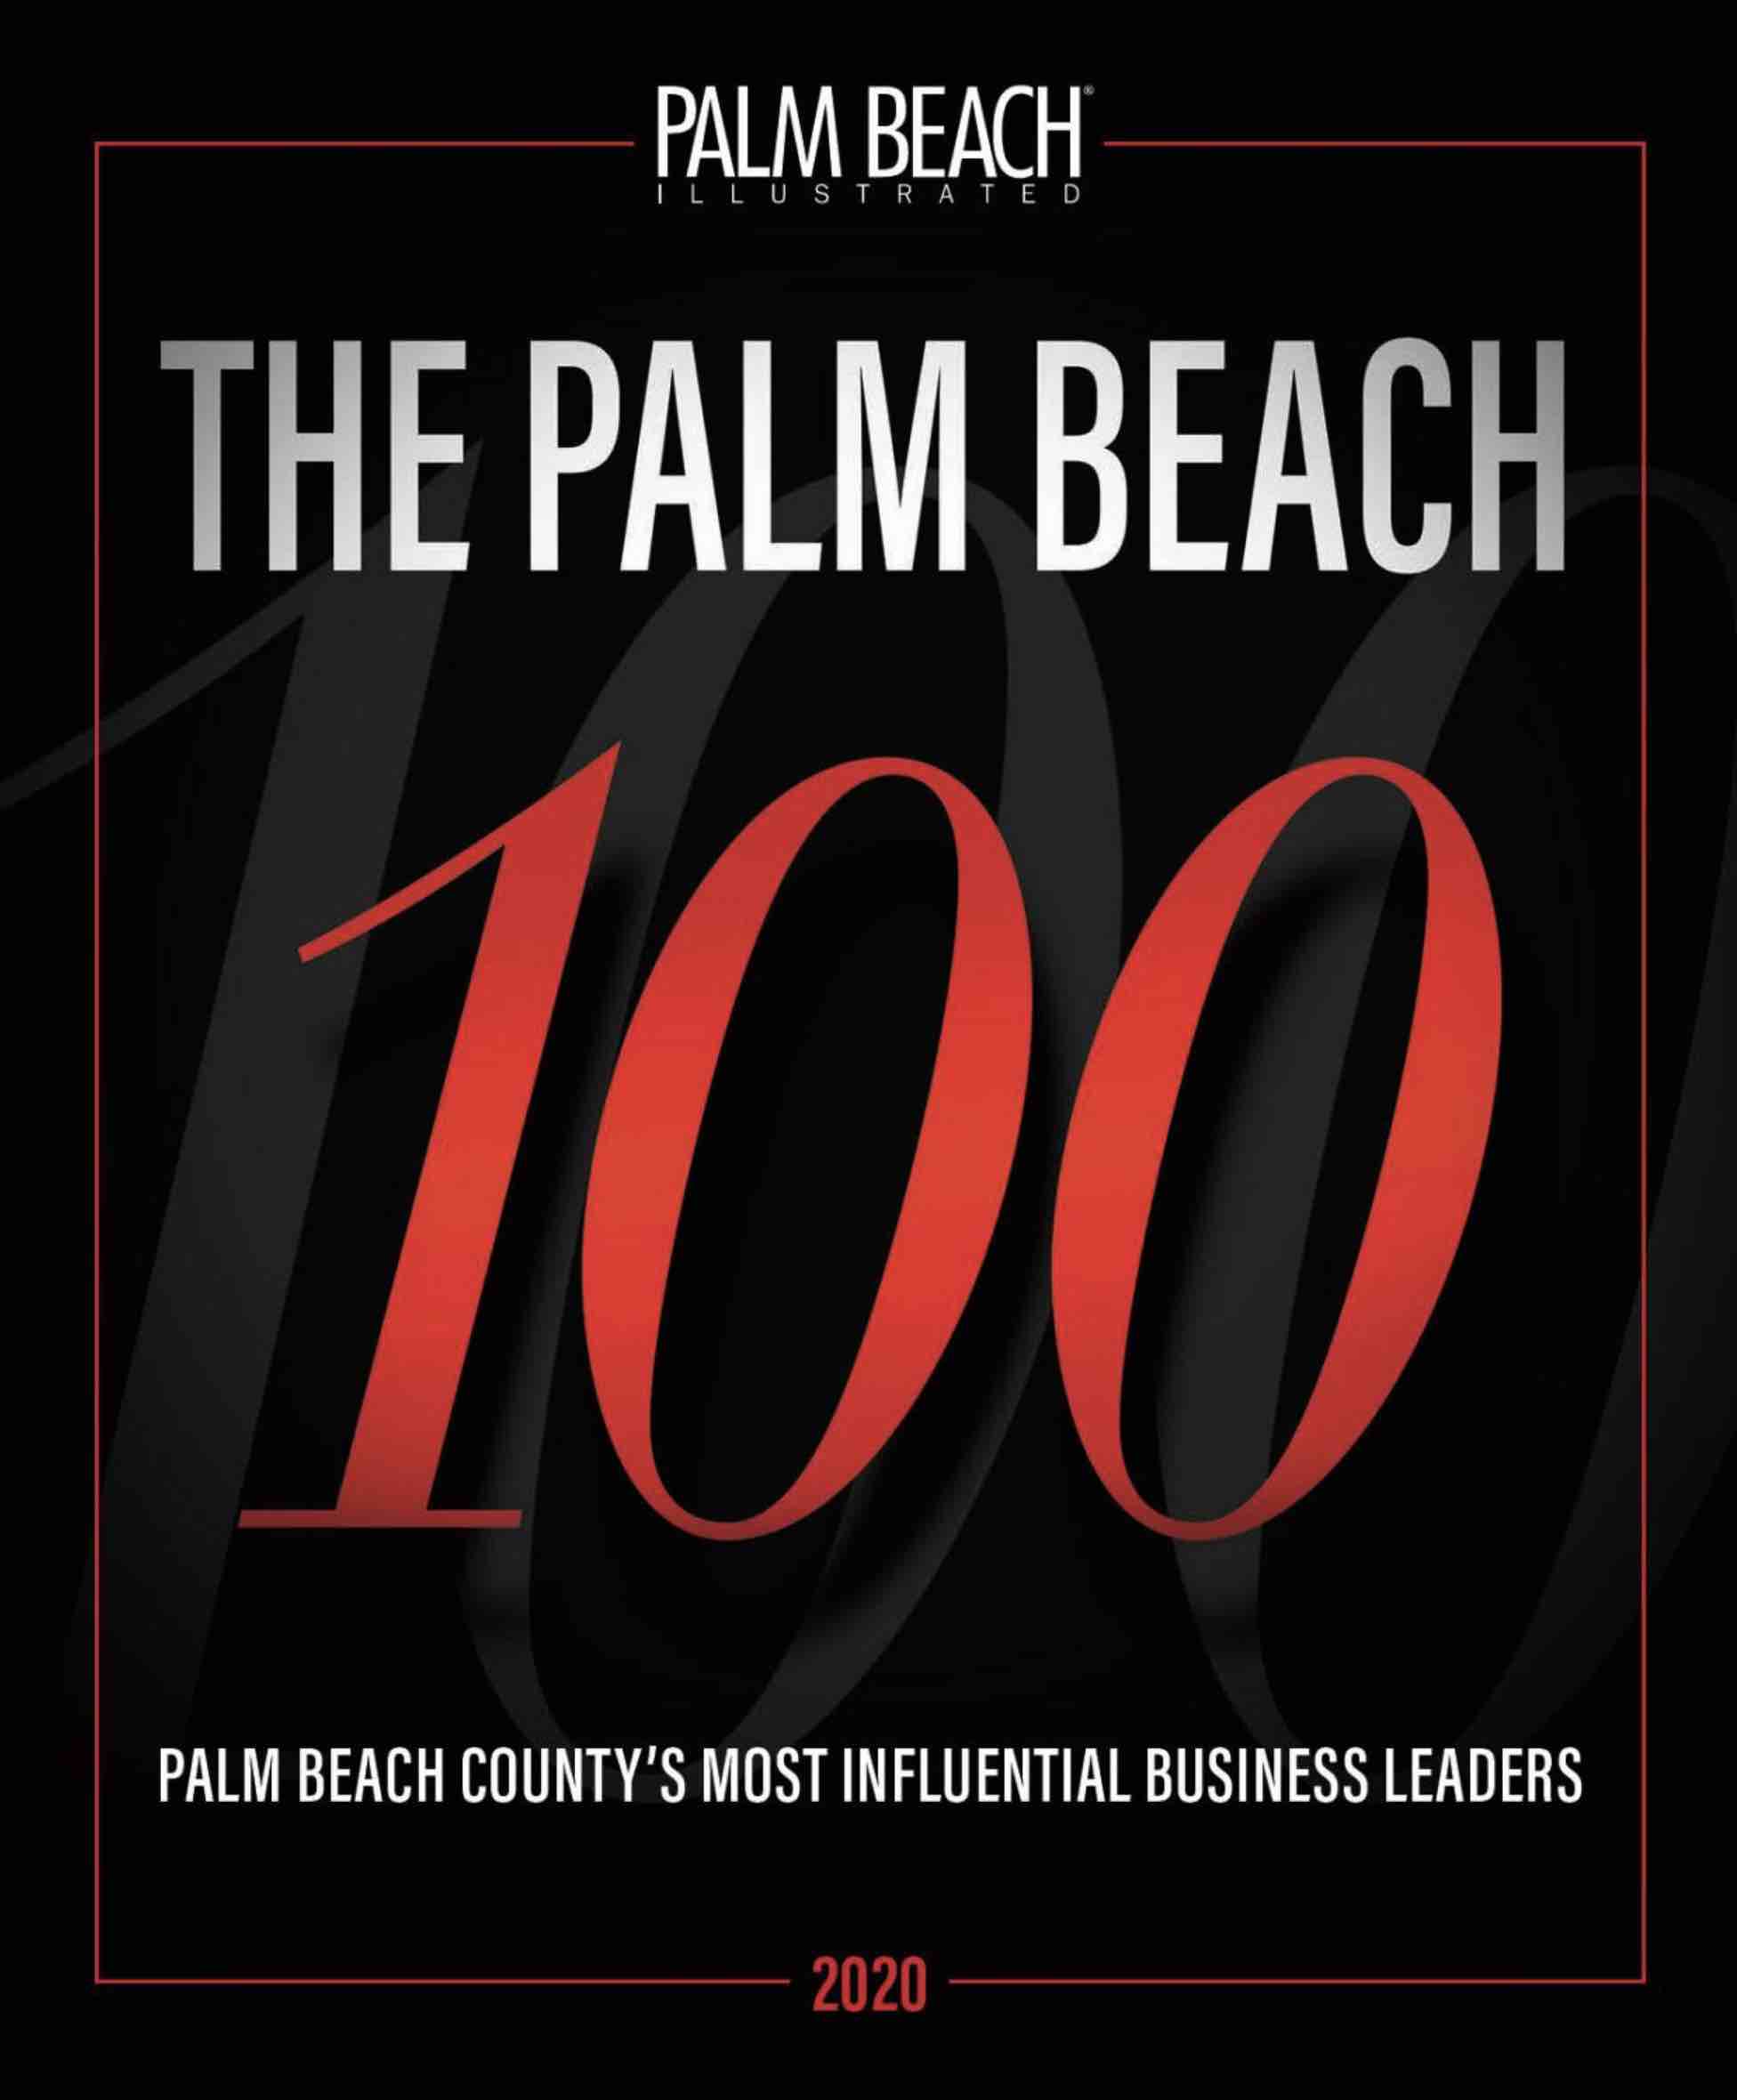 PALM BEACH ILLUSTRATED, THE PALM BEACH 100